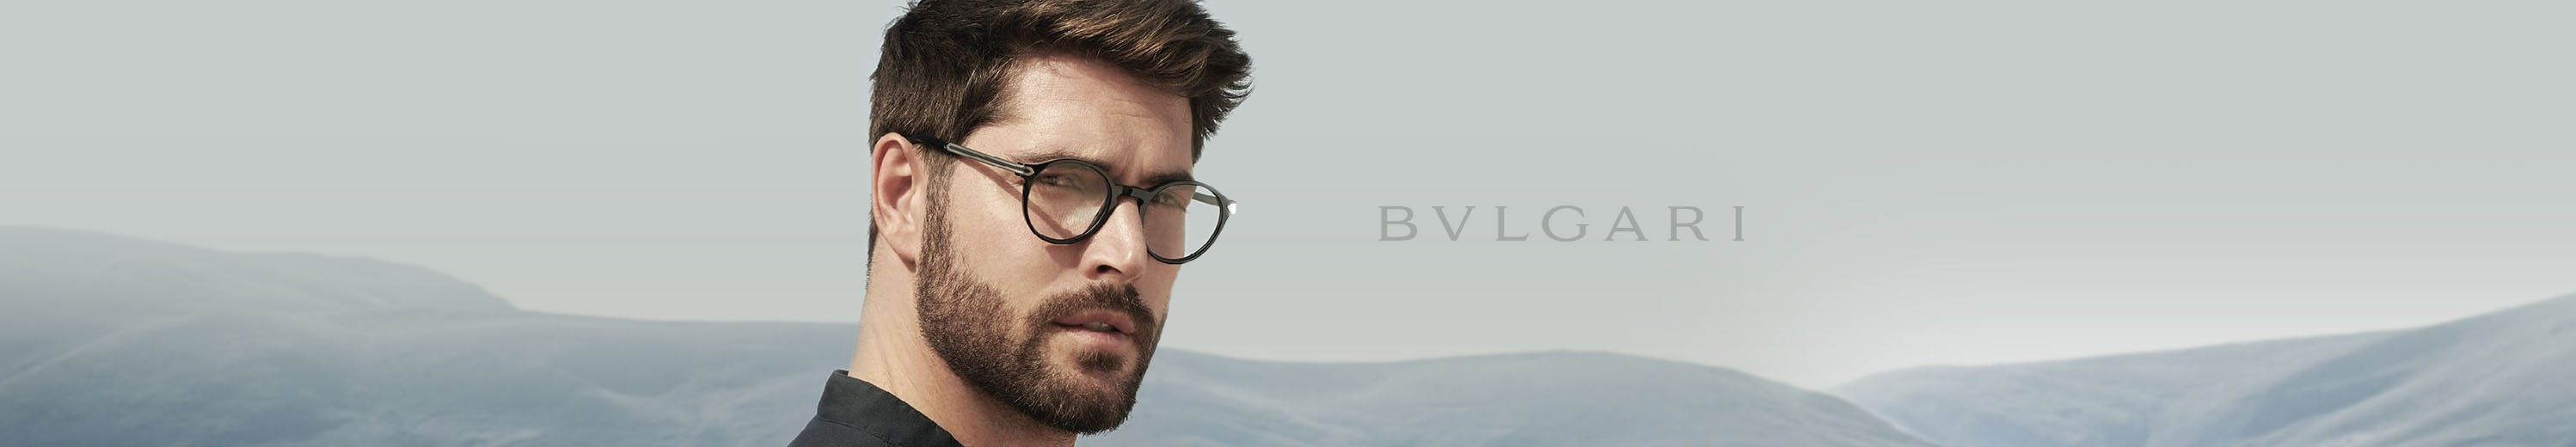 Bvlgari Eyeglasses for Men